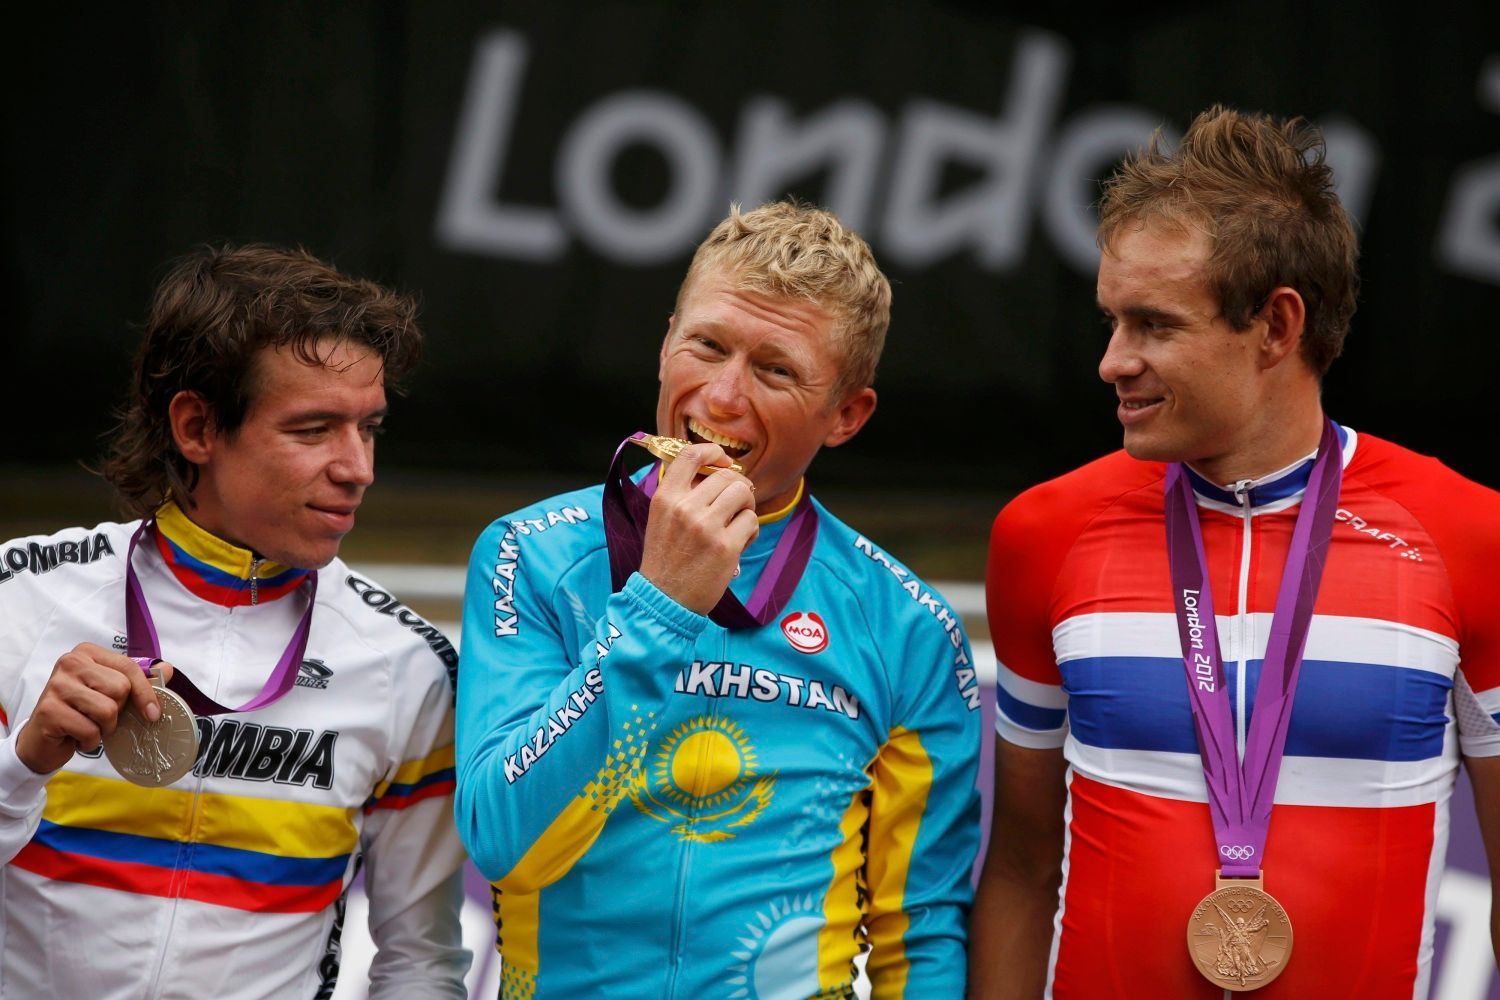 Olympijští medailisté v silniční cyklistice na OH 2012 v Londýně - zlatý Kazach Alexandr Vinokurov, stříbrný Kolumbijec Rigoberto Uran a bronzový Nor Alexander Kristoff.